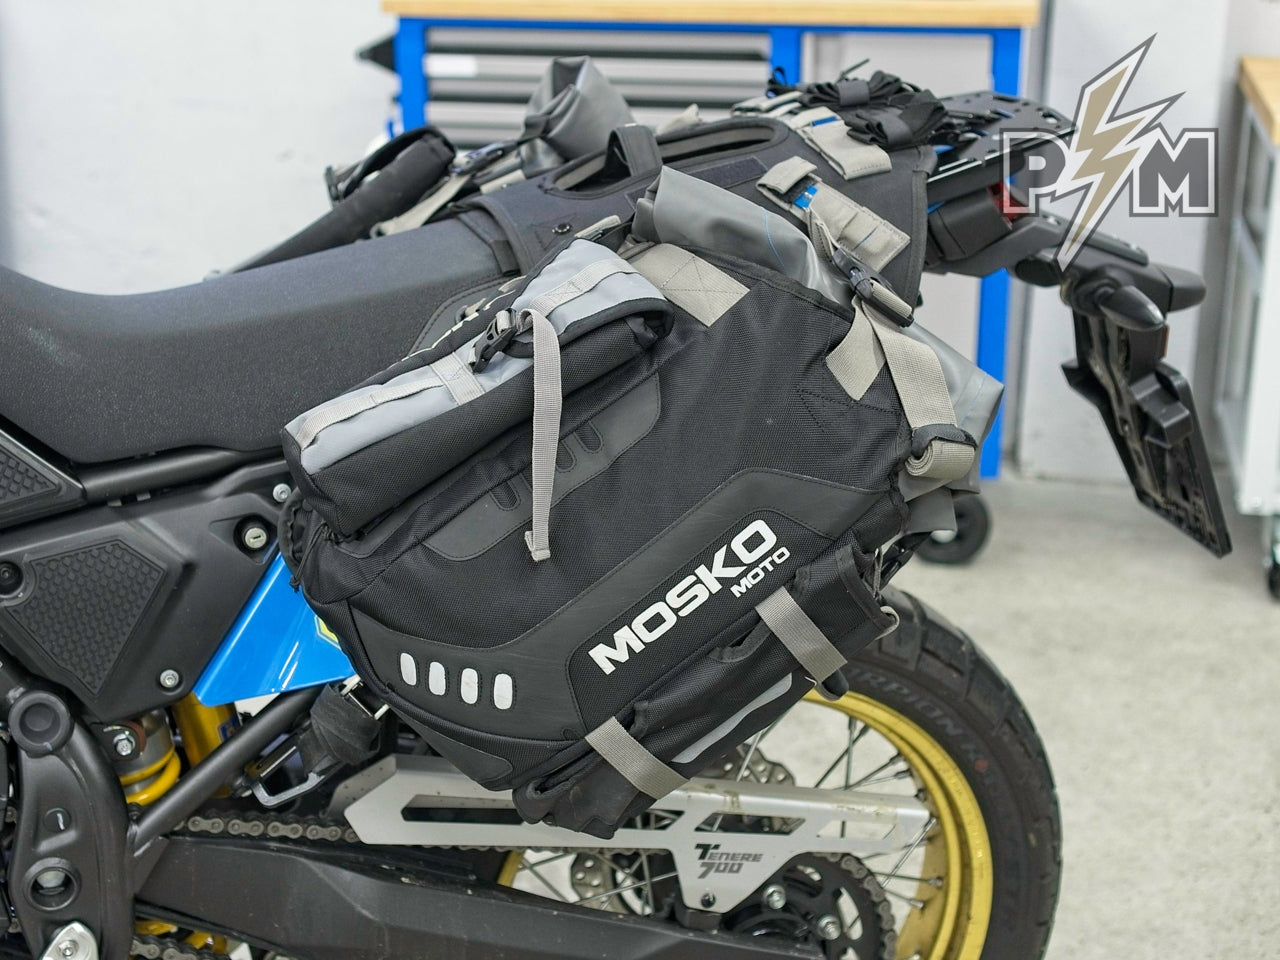 Mosko moto Reckless 80 v3 on Yamaha Tenere 700